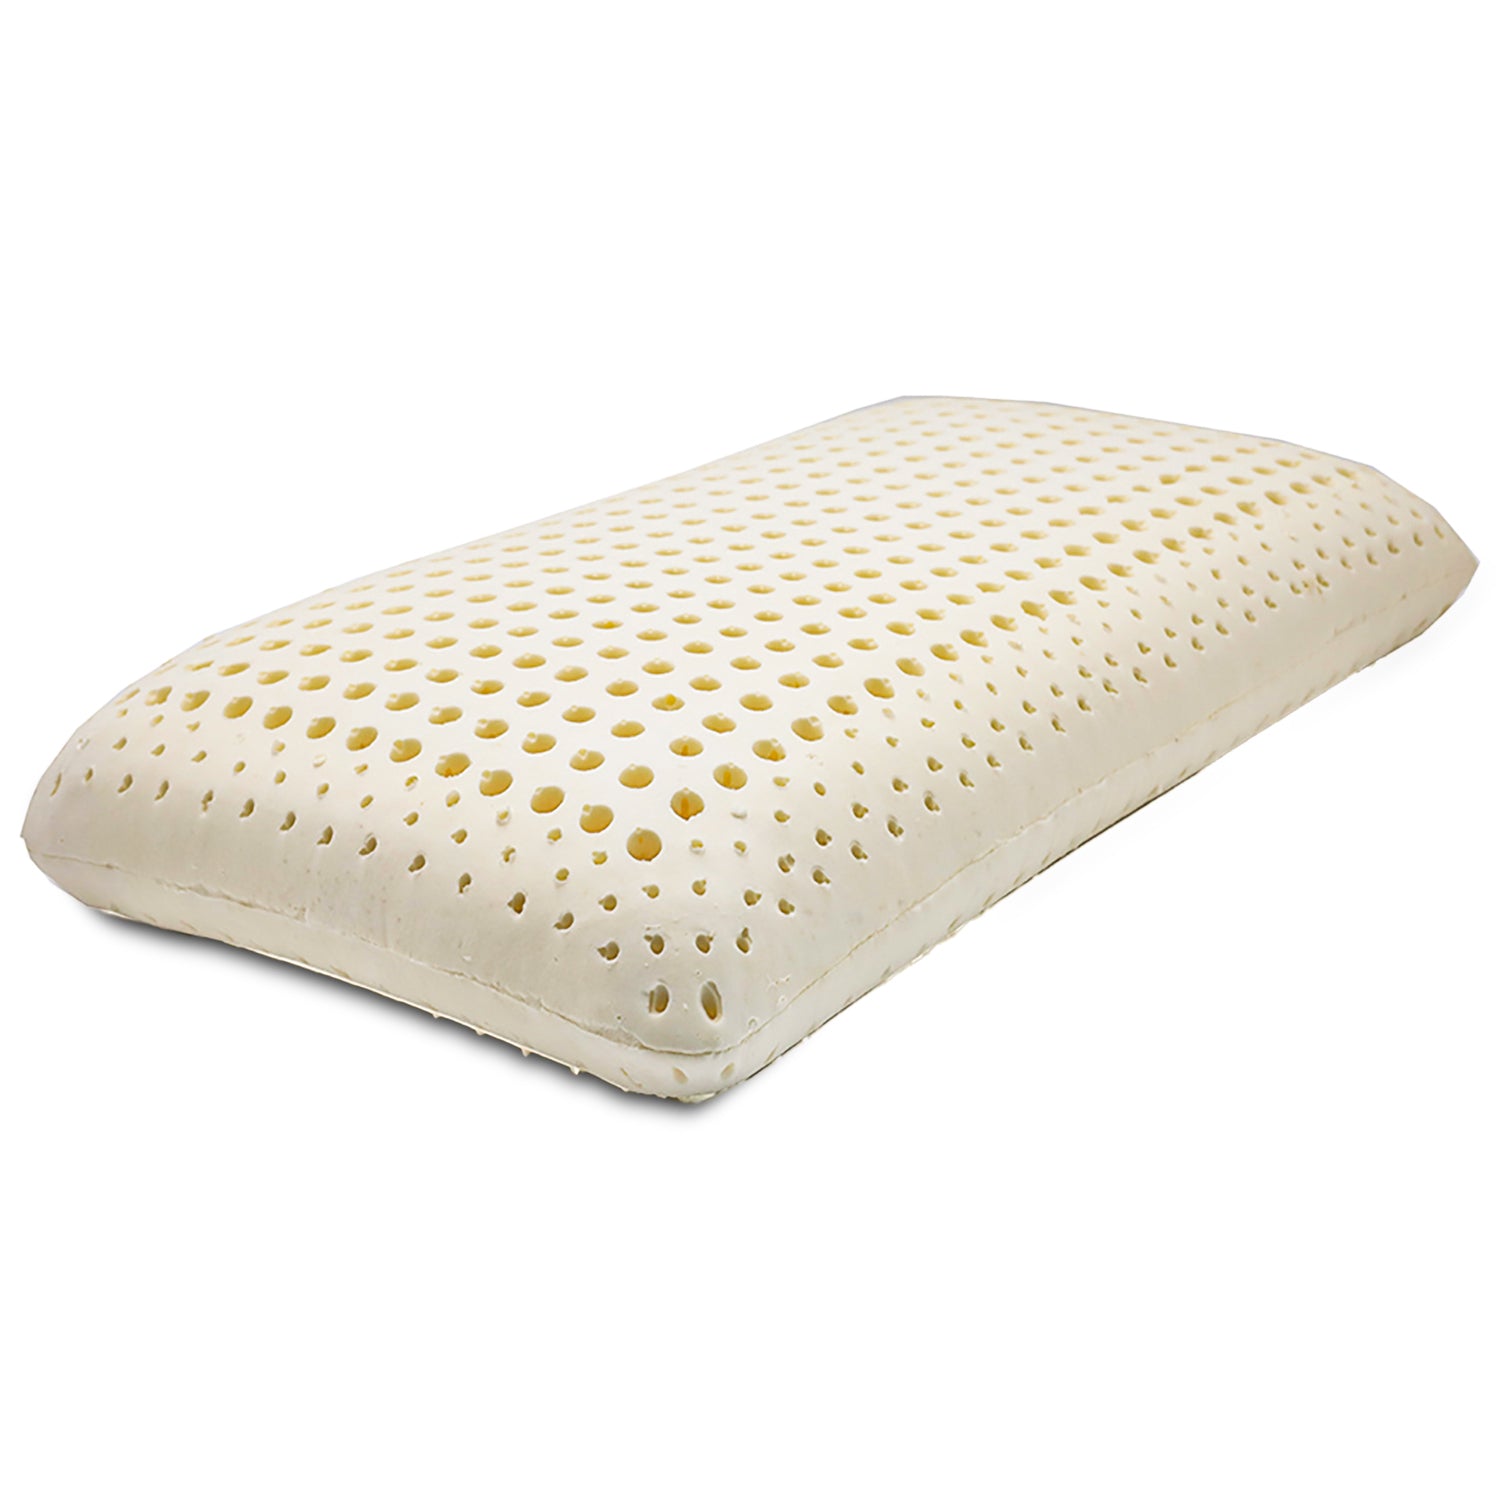 100% Organic Dunlop Latex Pillow (Dual Zone) with Premium Organic